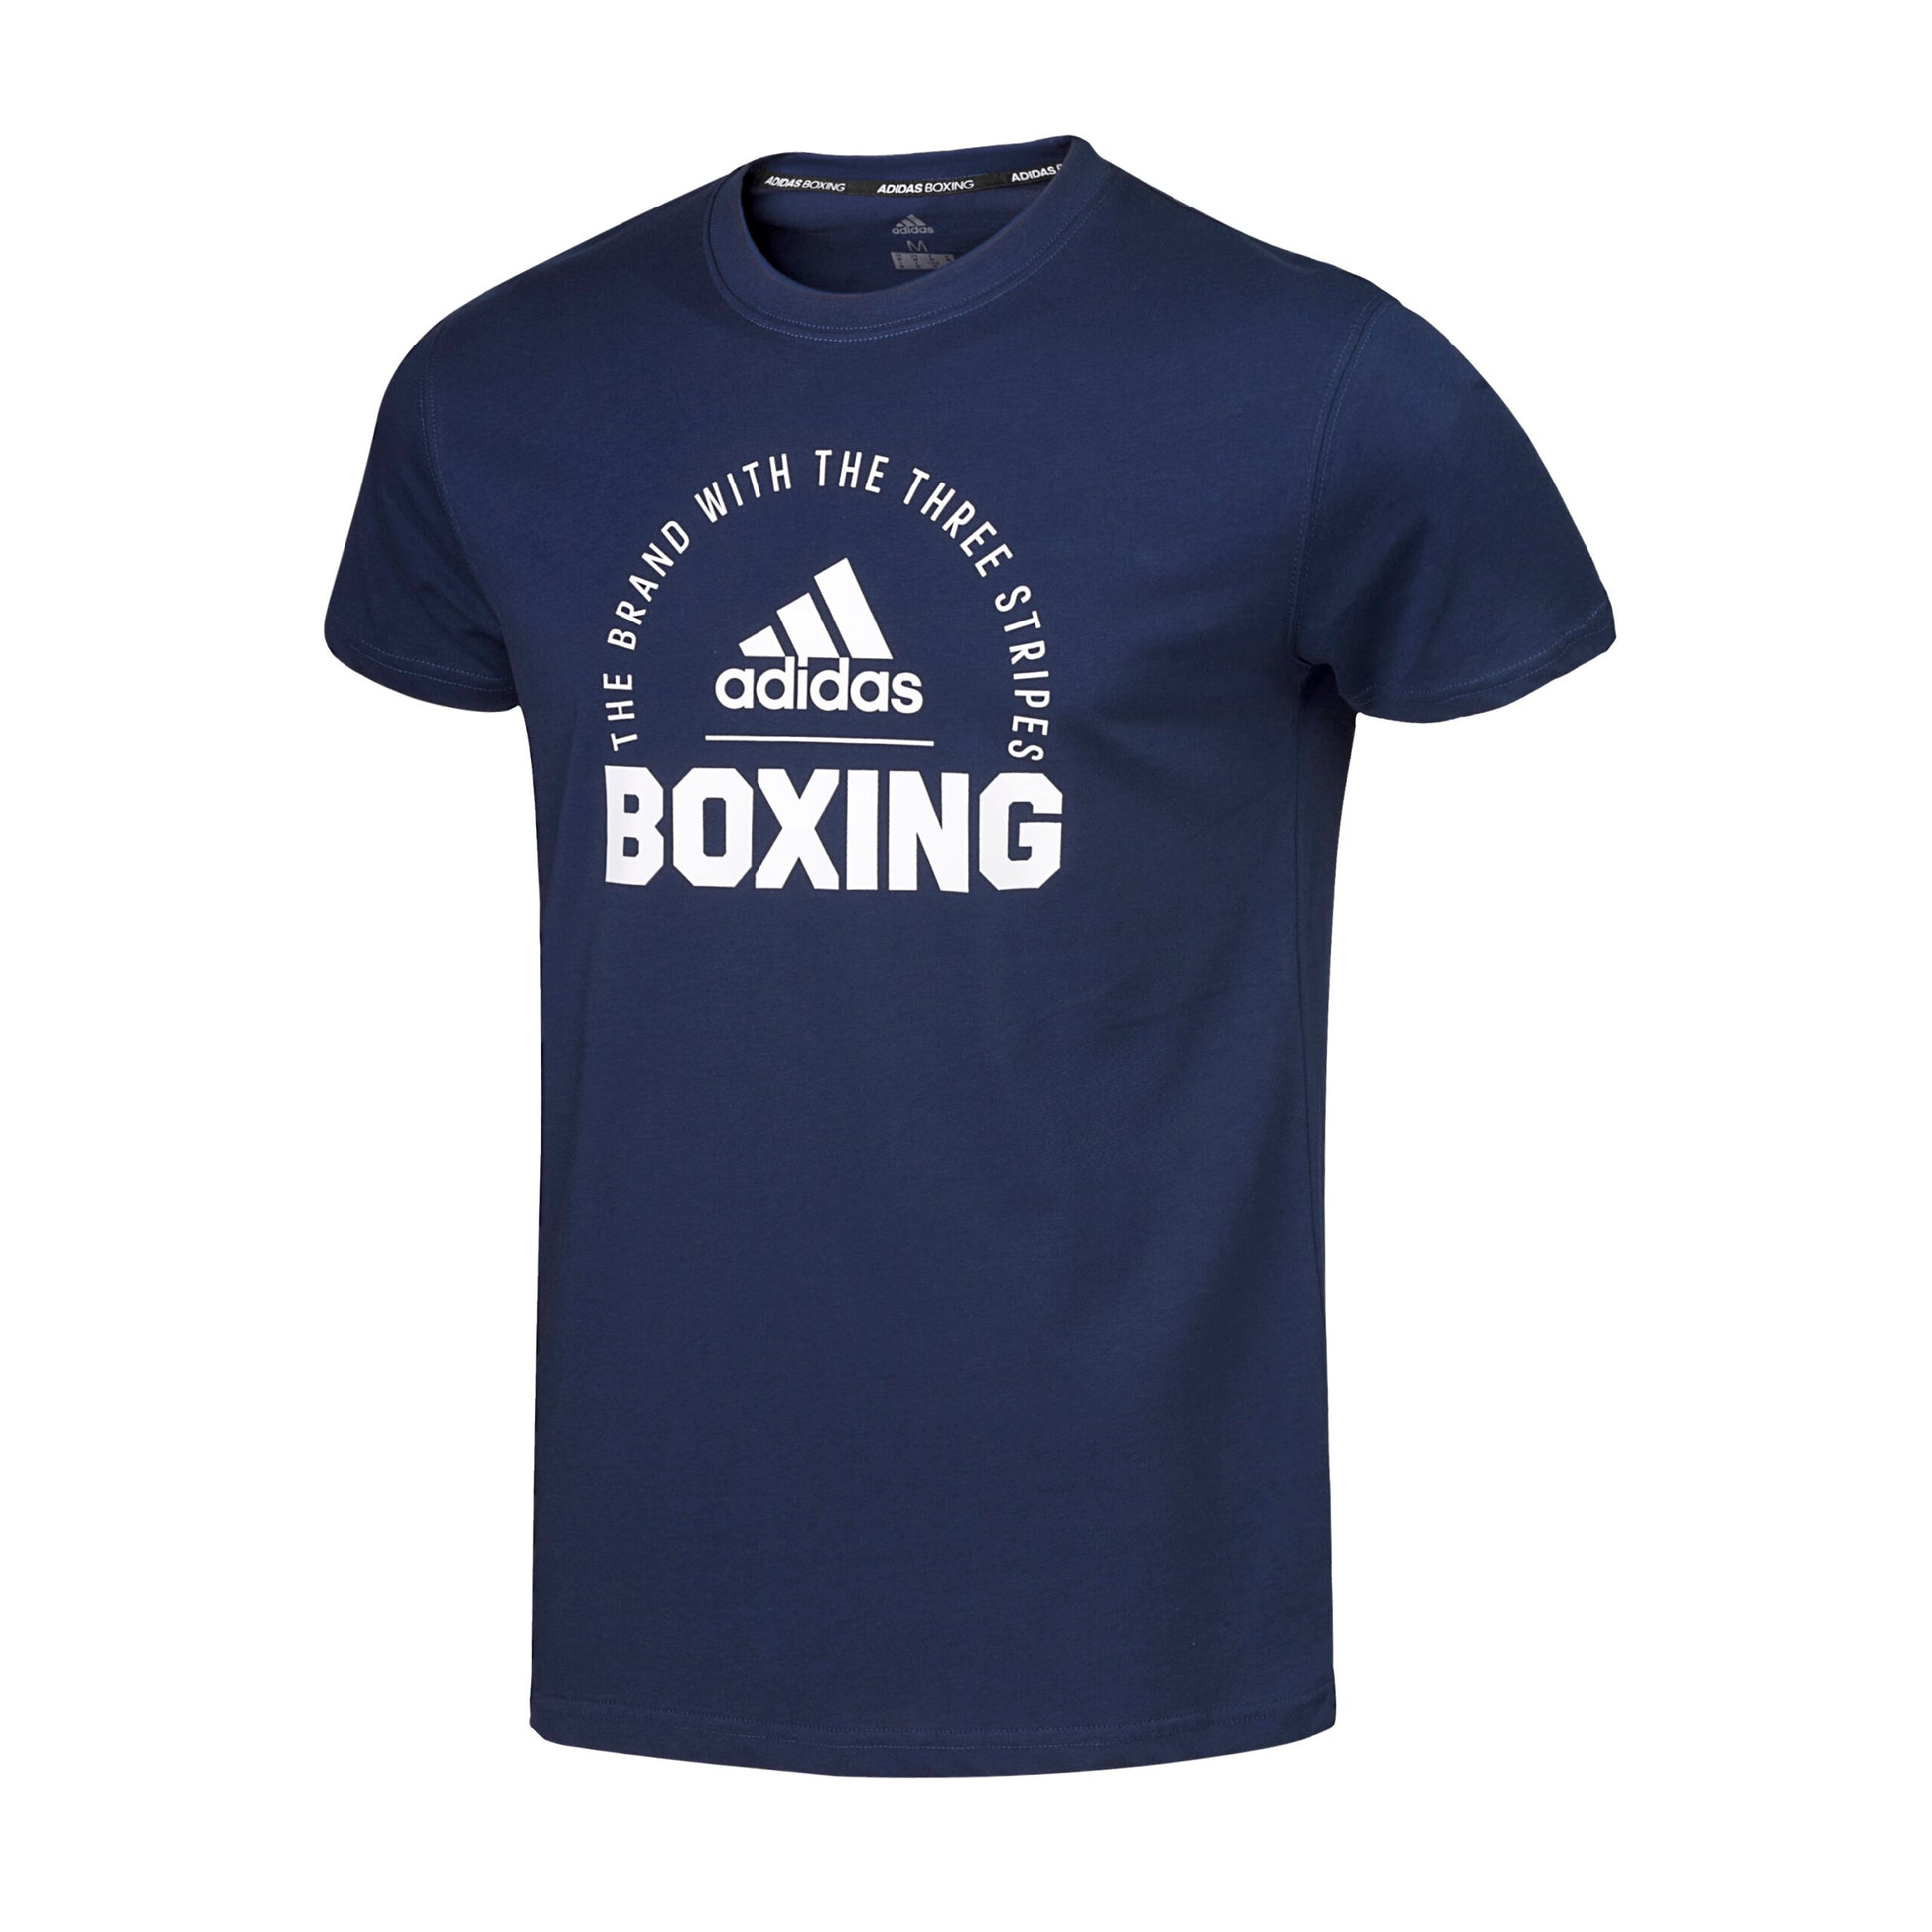 Clts21 B Adidas Boxing T Shirt Blue 02